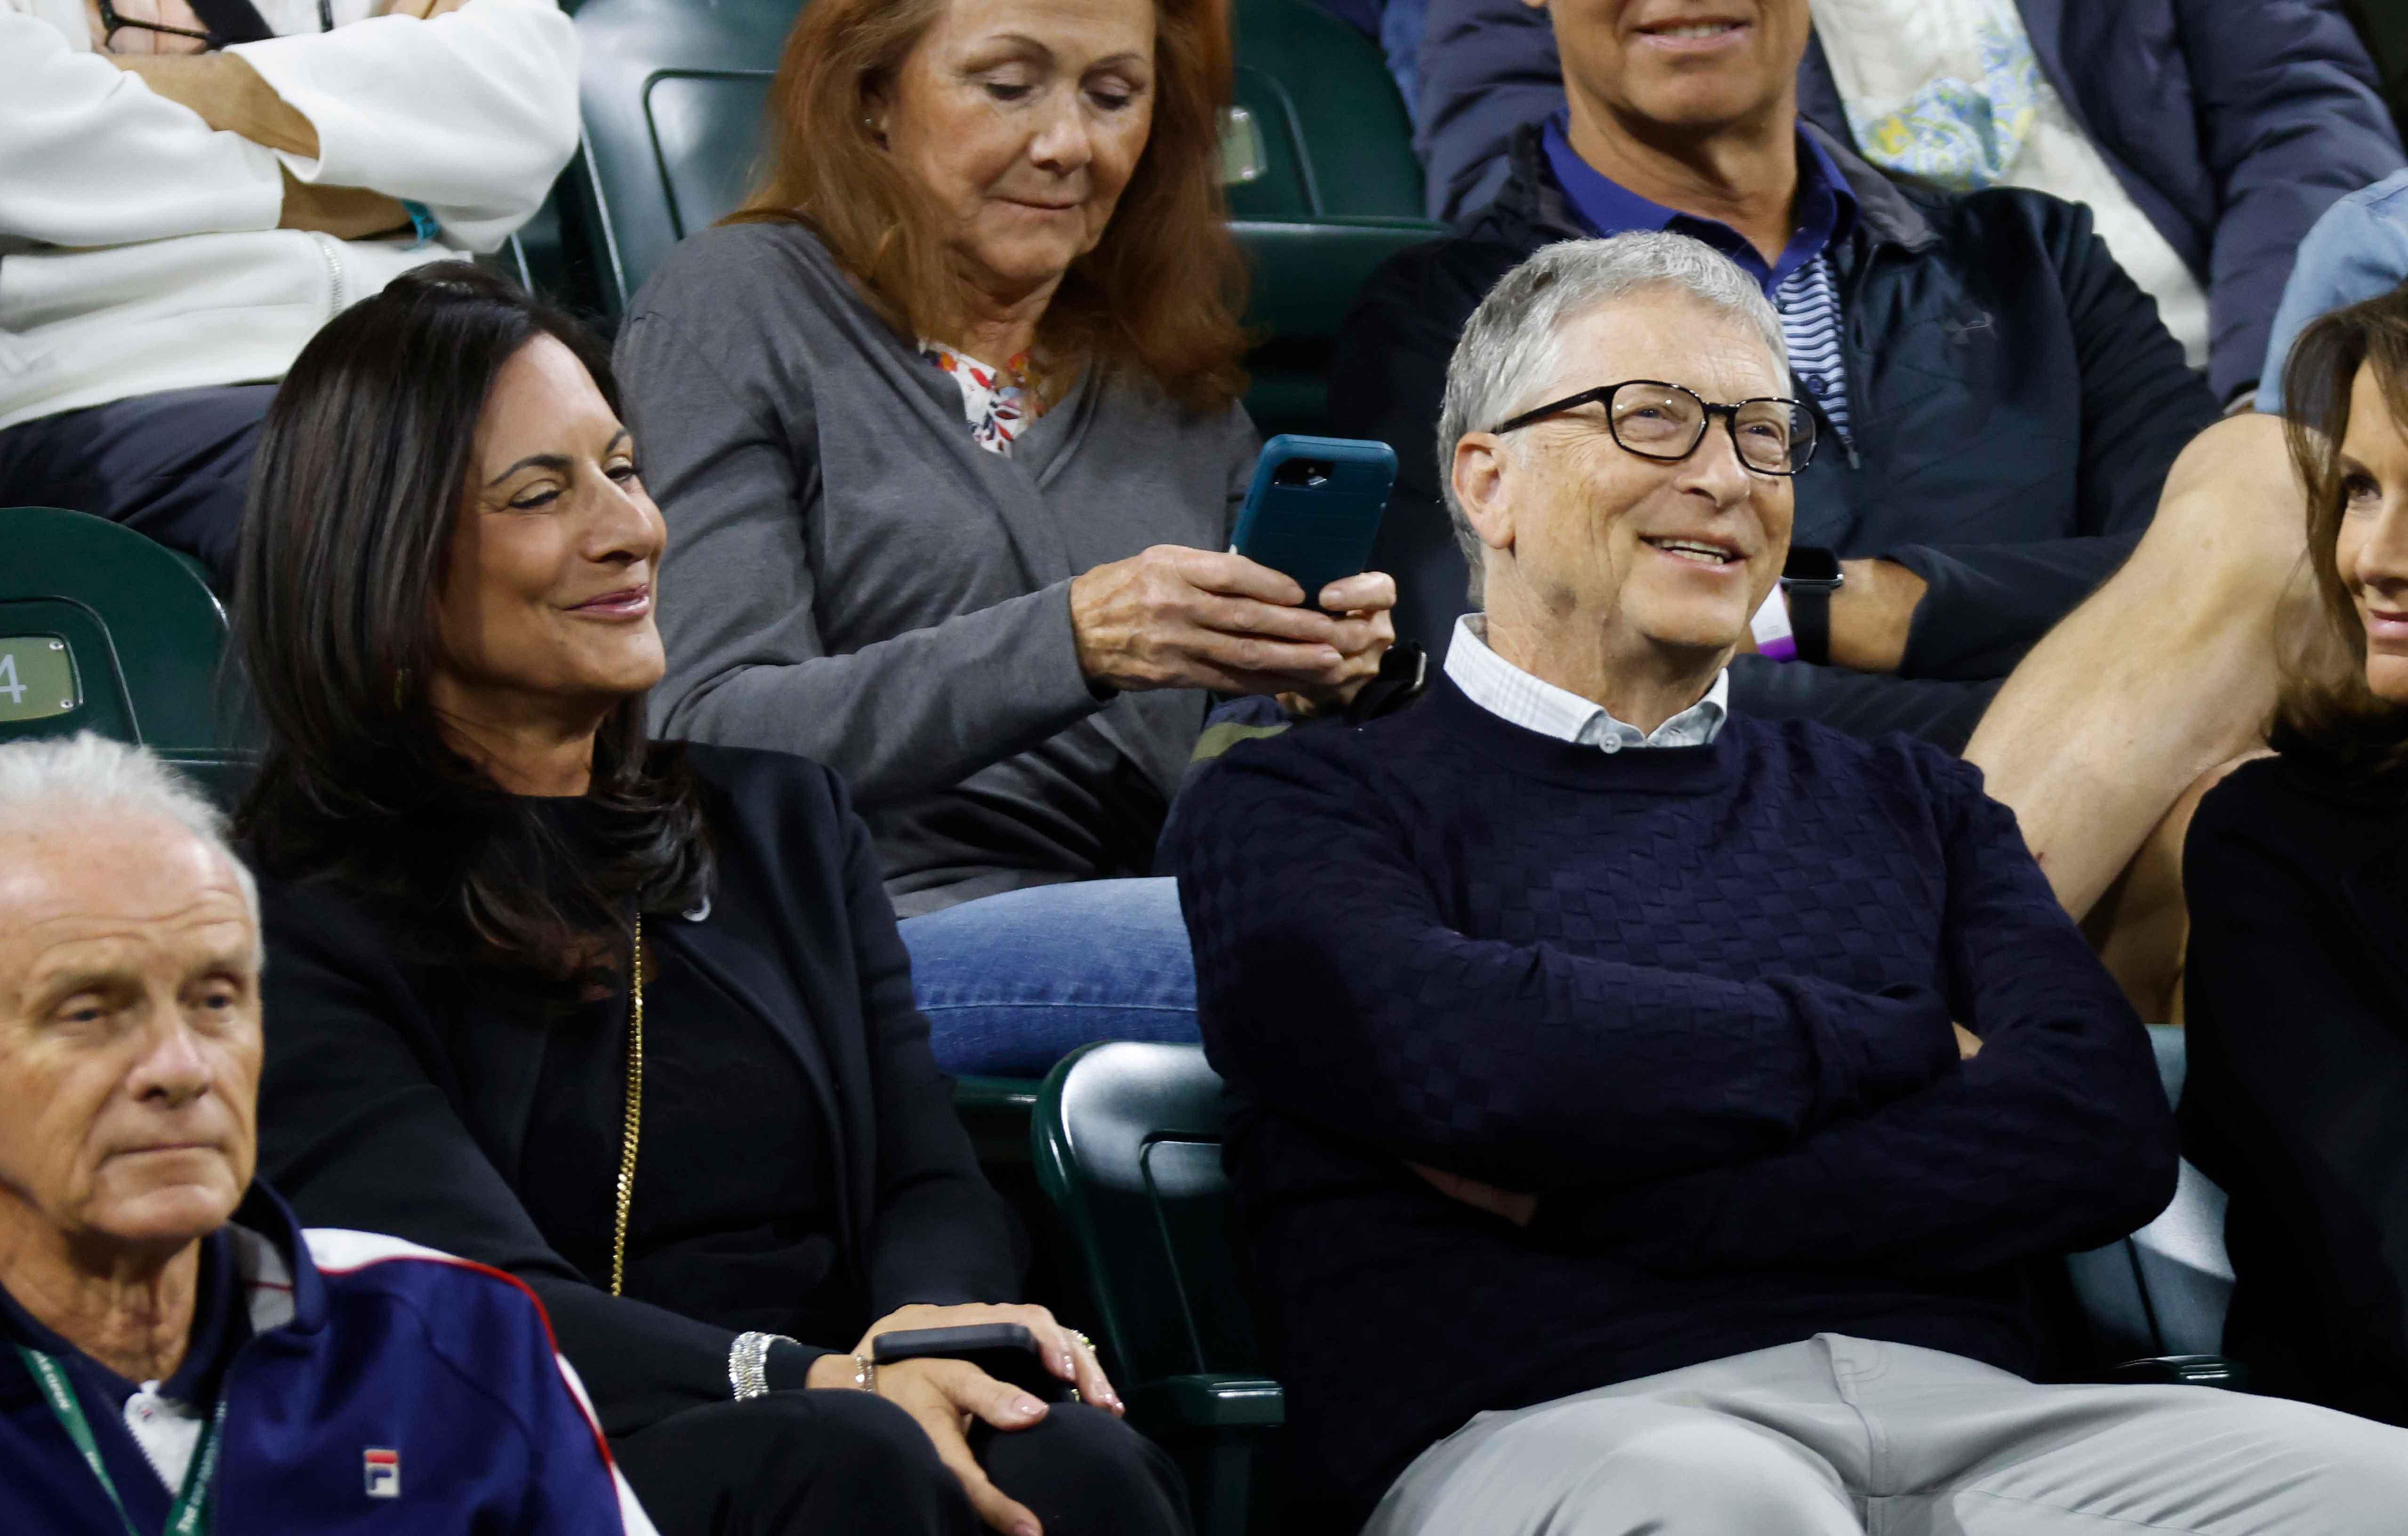 Bill Gates' new romance with girlfriend Paula Hurd: Who is she?